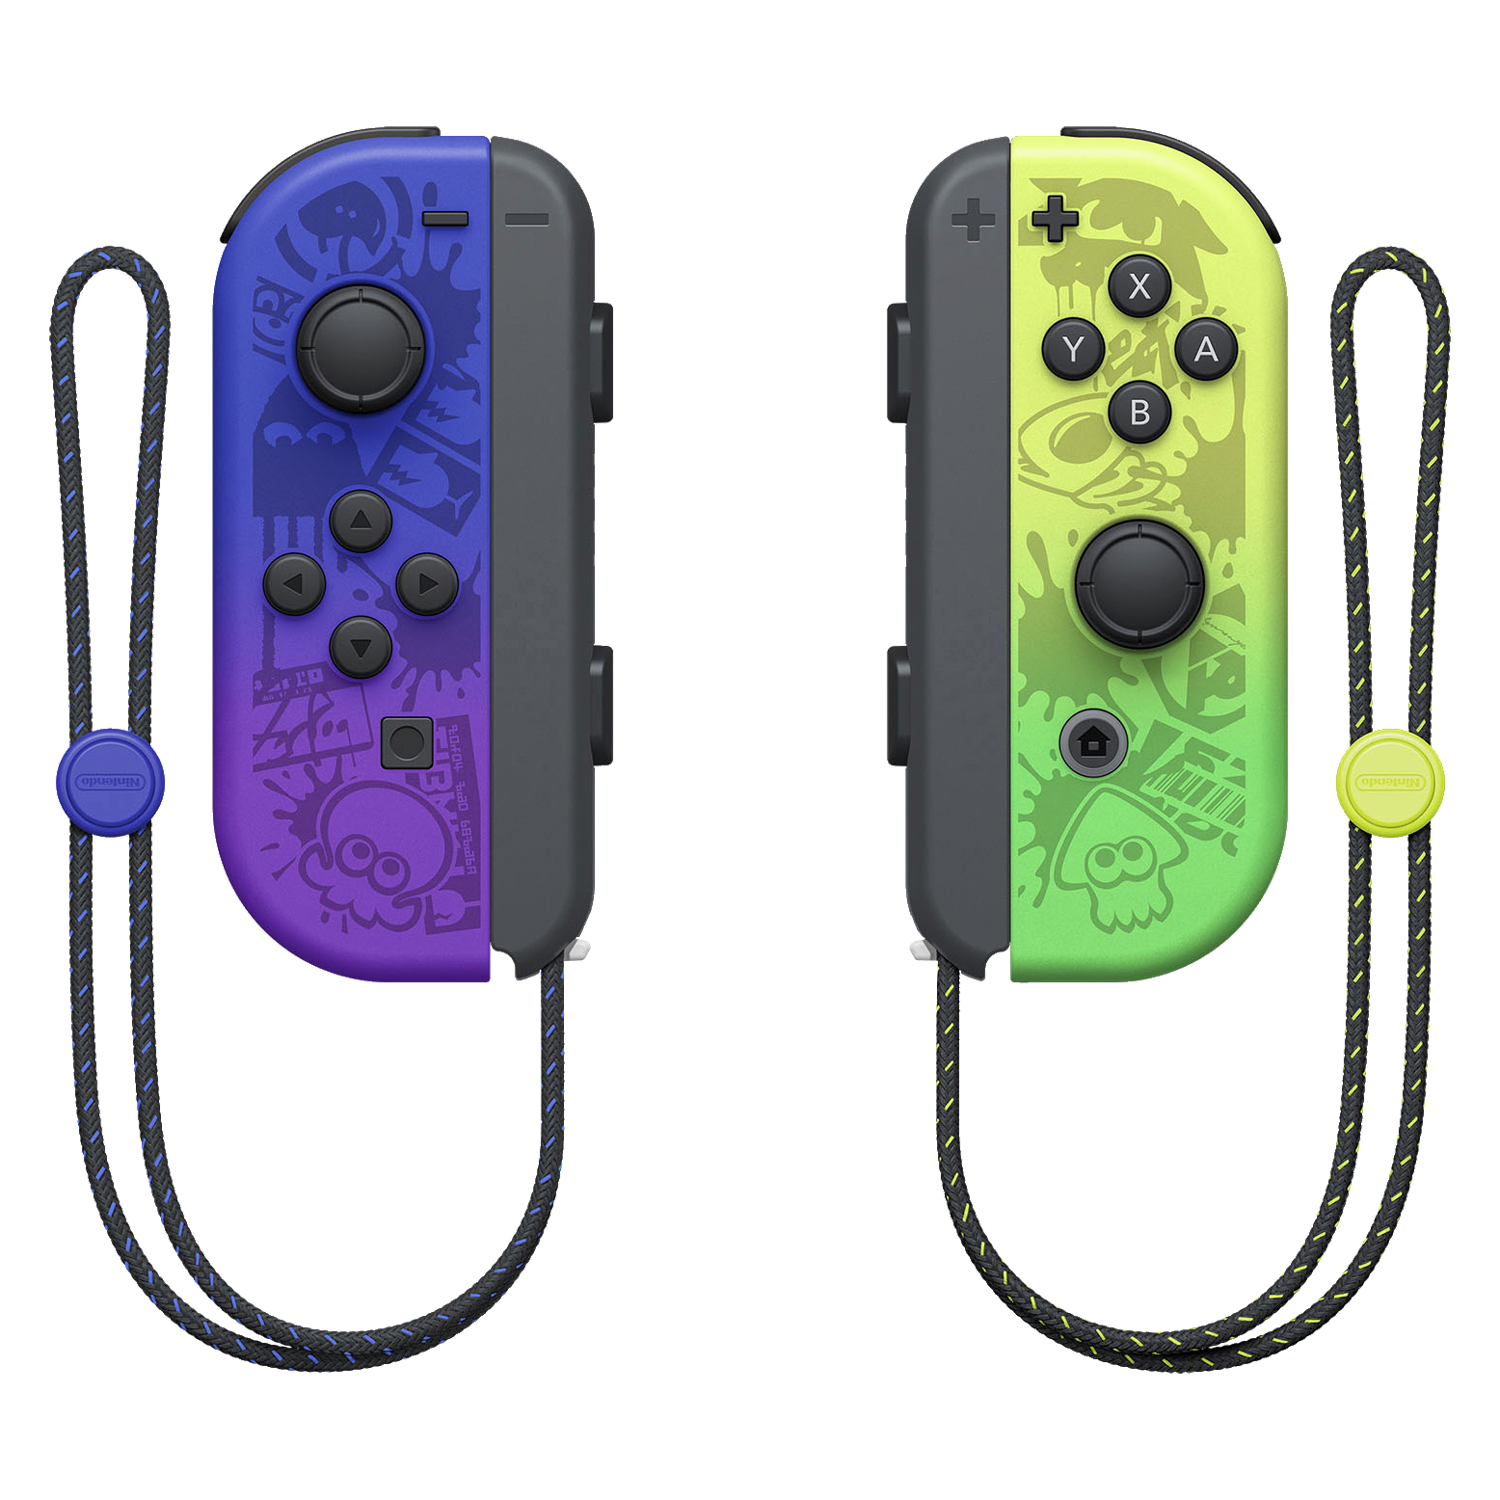 Nintendo Switch - Chapada, as